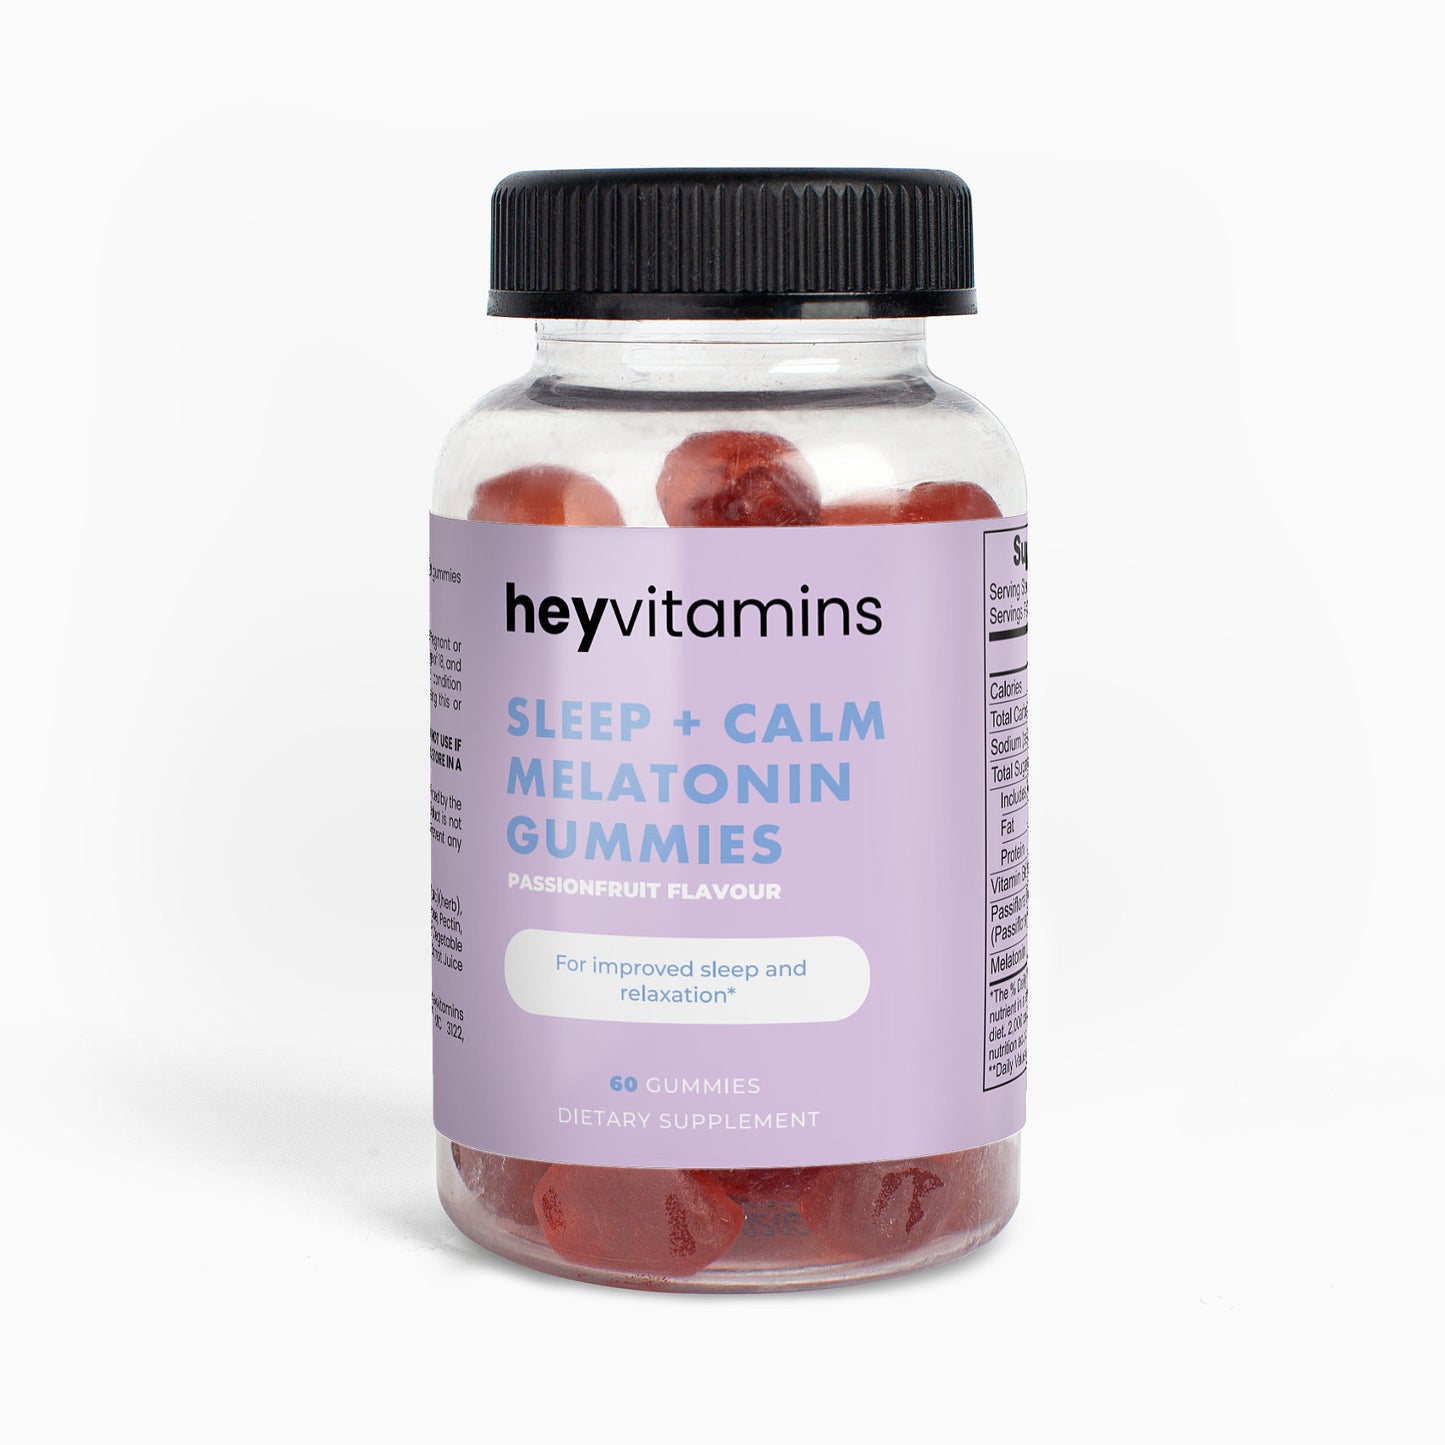 Sleep + Calm Melatonin Gummies